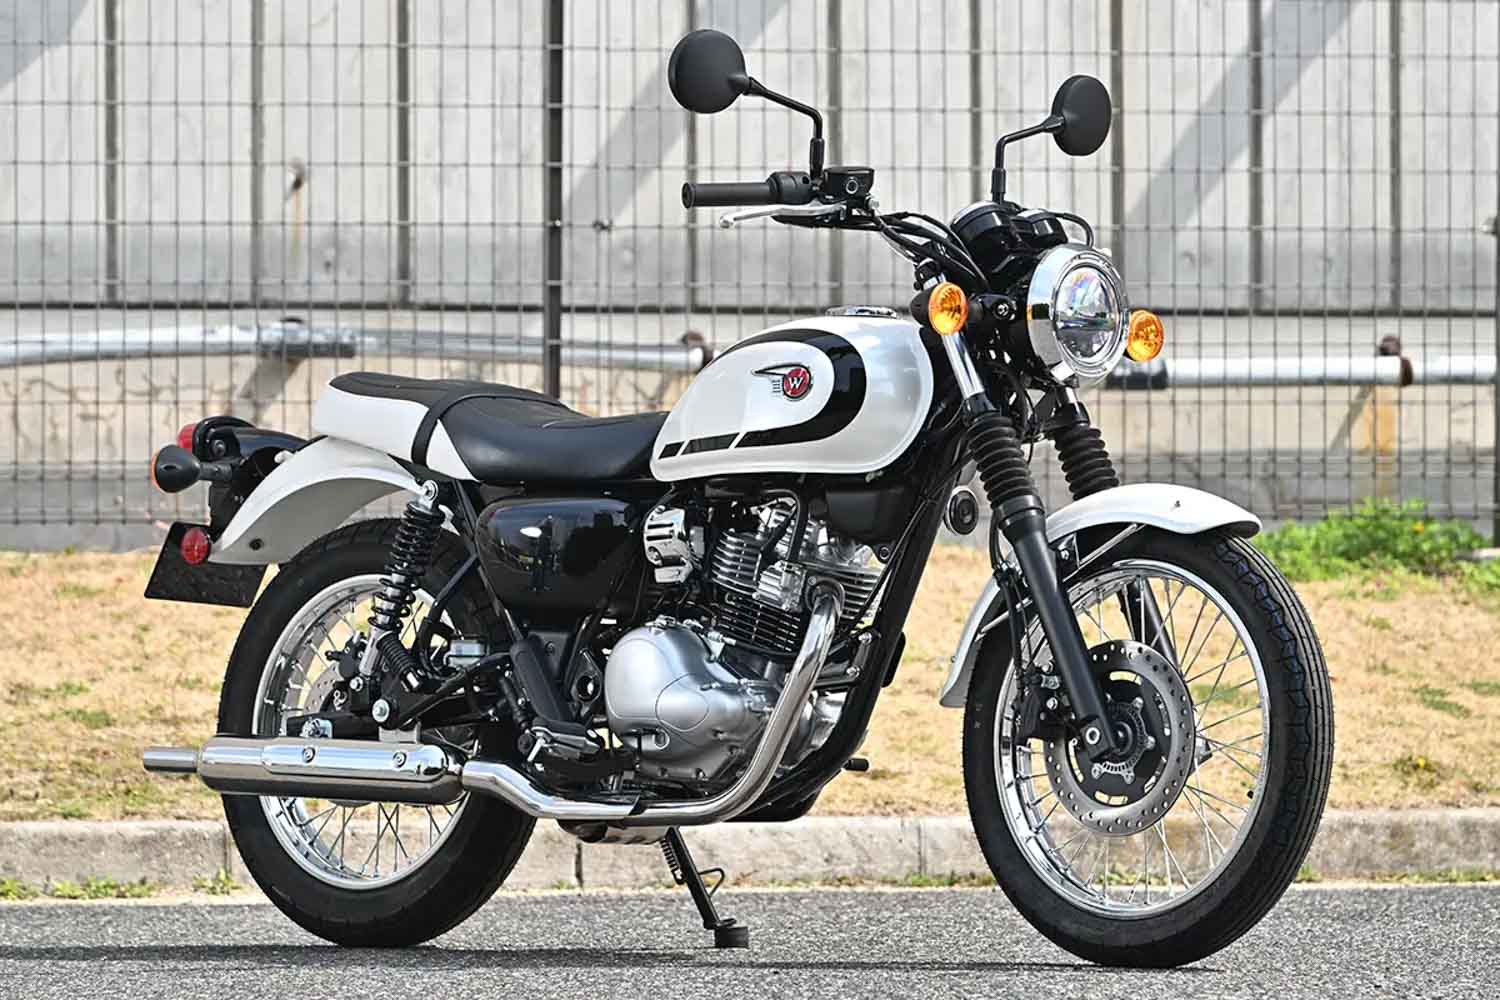 Kawasaki W230 (RE 350 Rival) Revealed With Retro Design